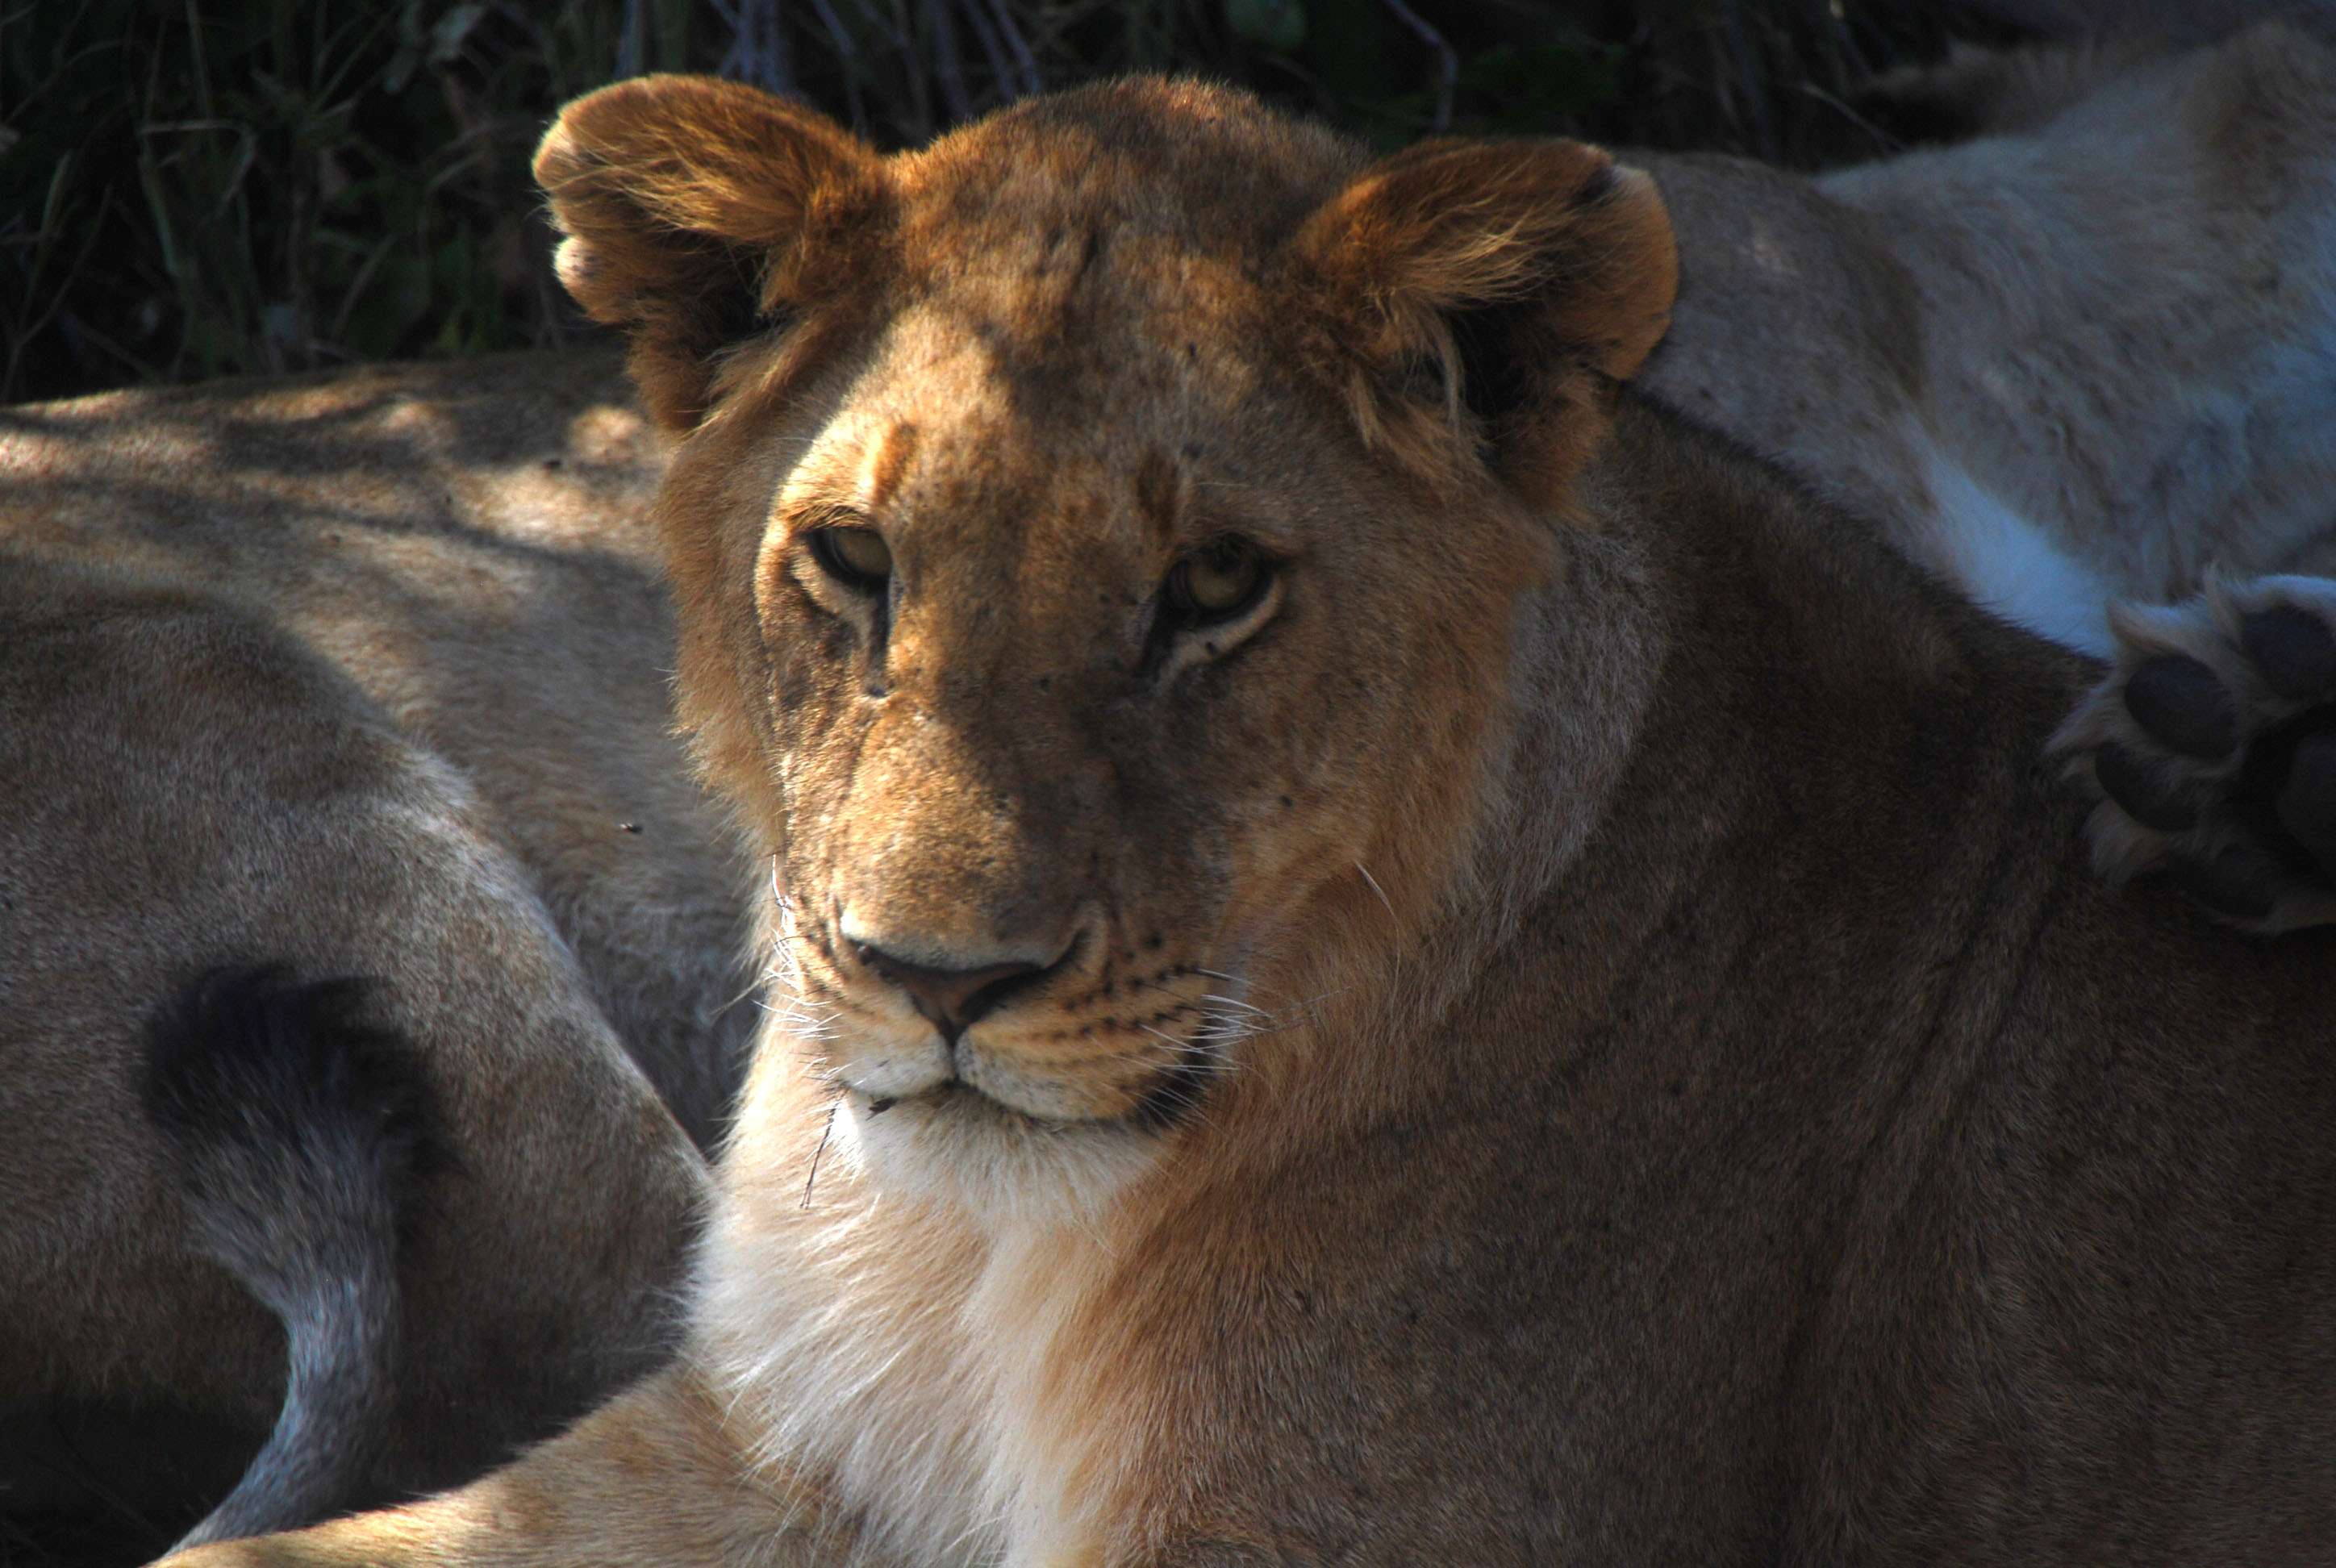 Nuestro primer safari - Regreso al Mara - Kenia (6)